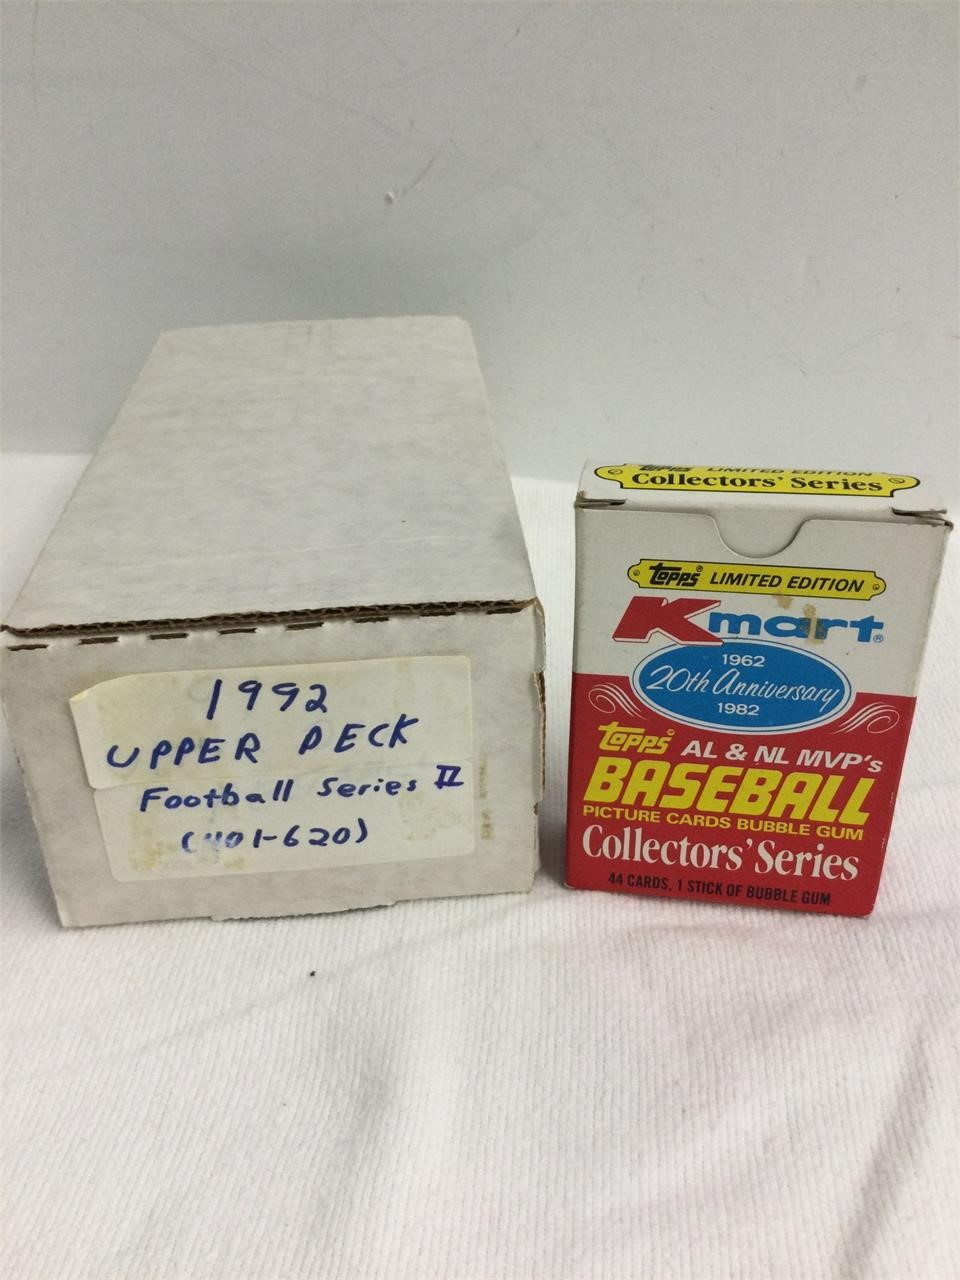 1994 Set of Upper Deck Baseball Cards